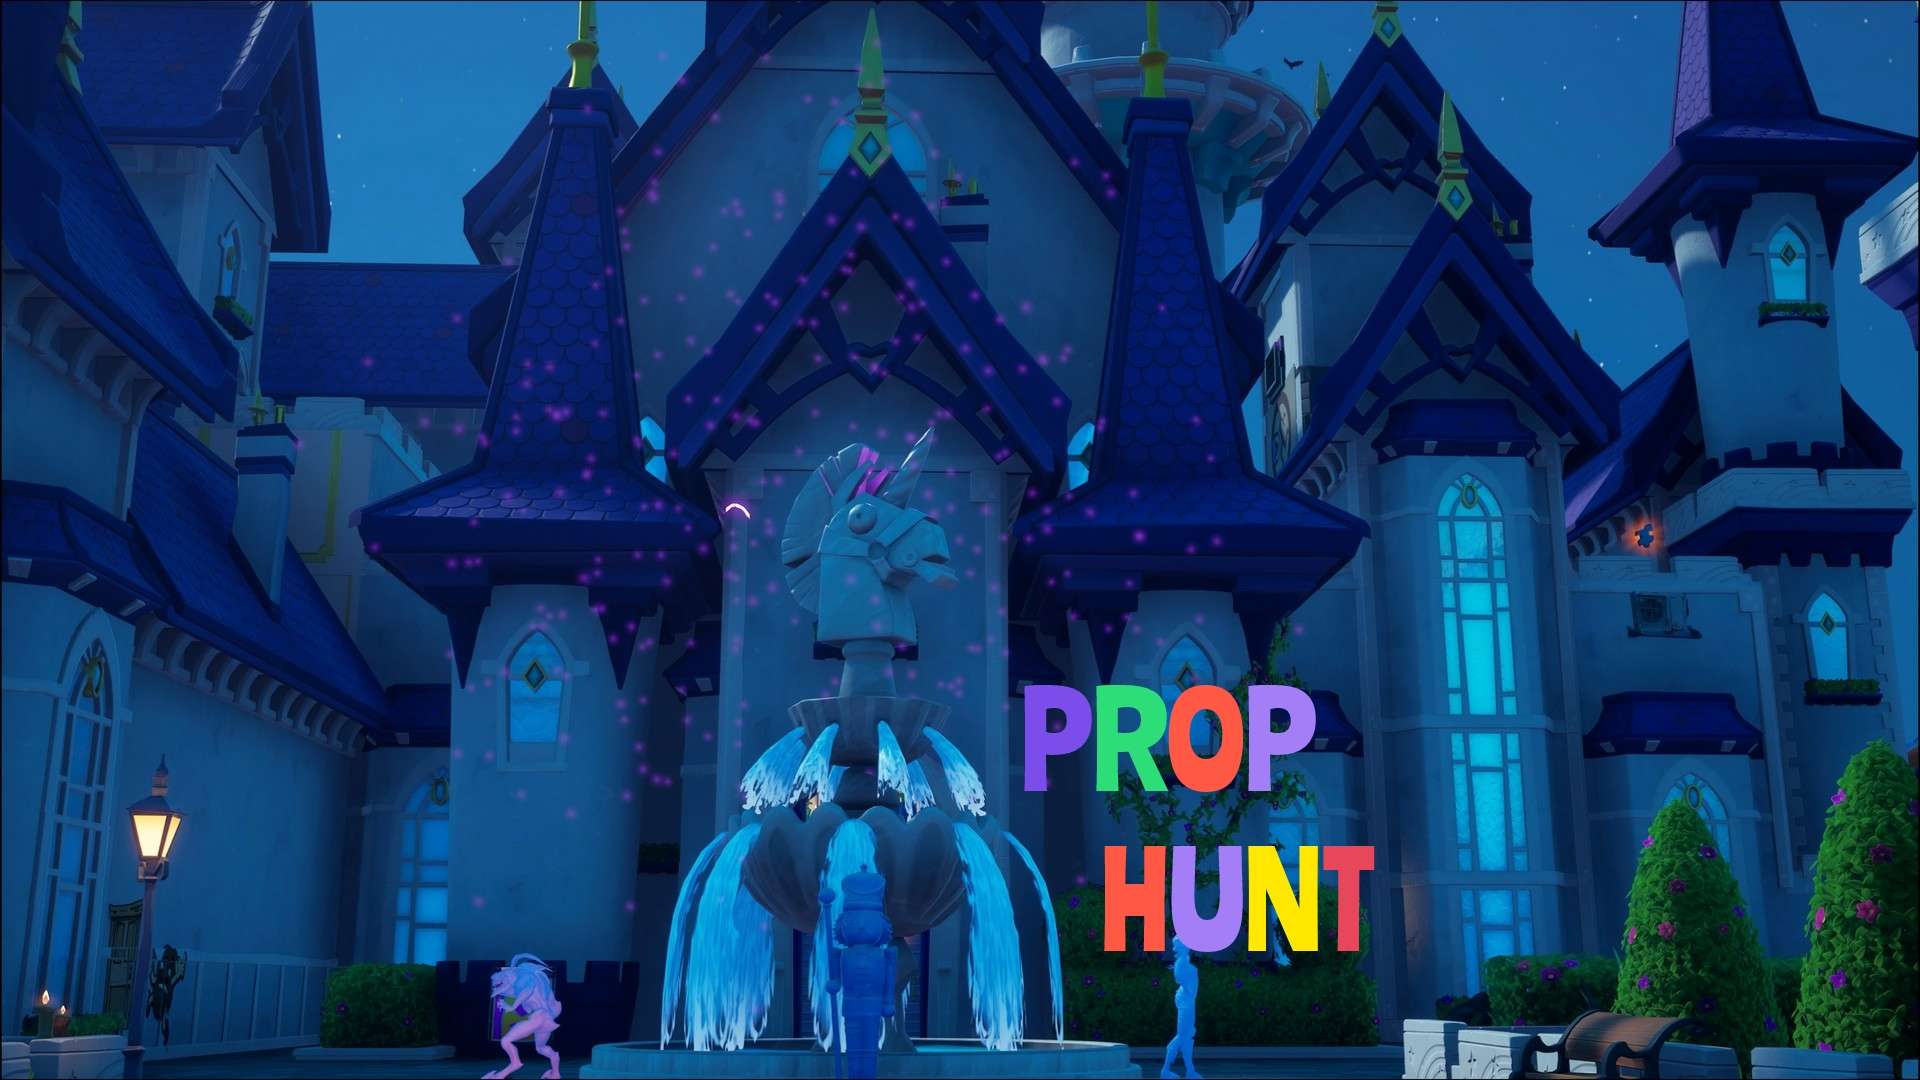 Prop hunt Magic Castle